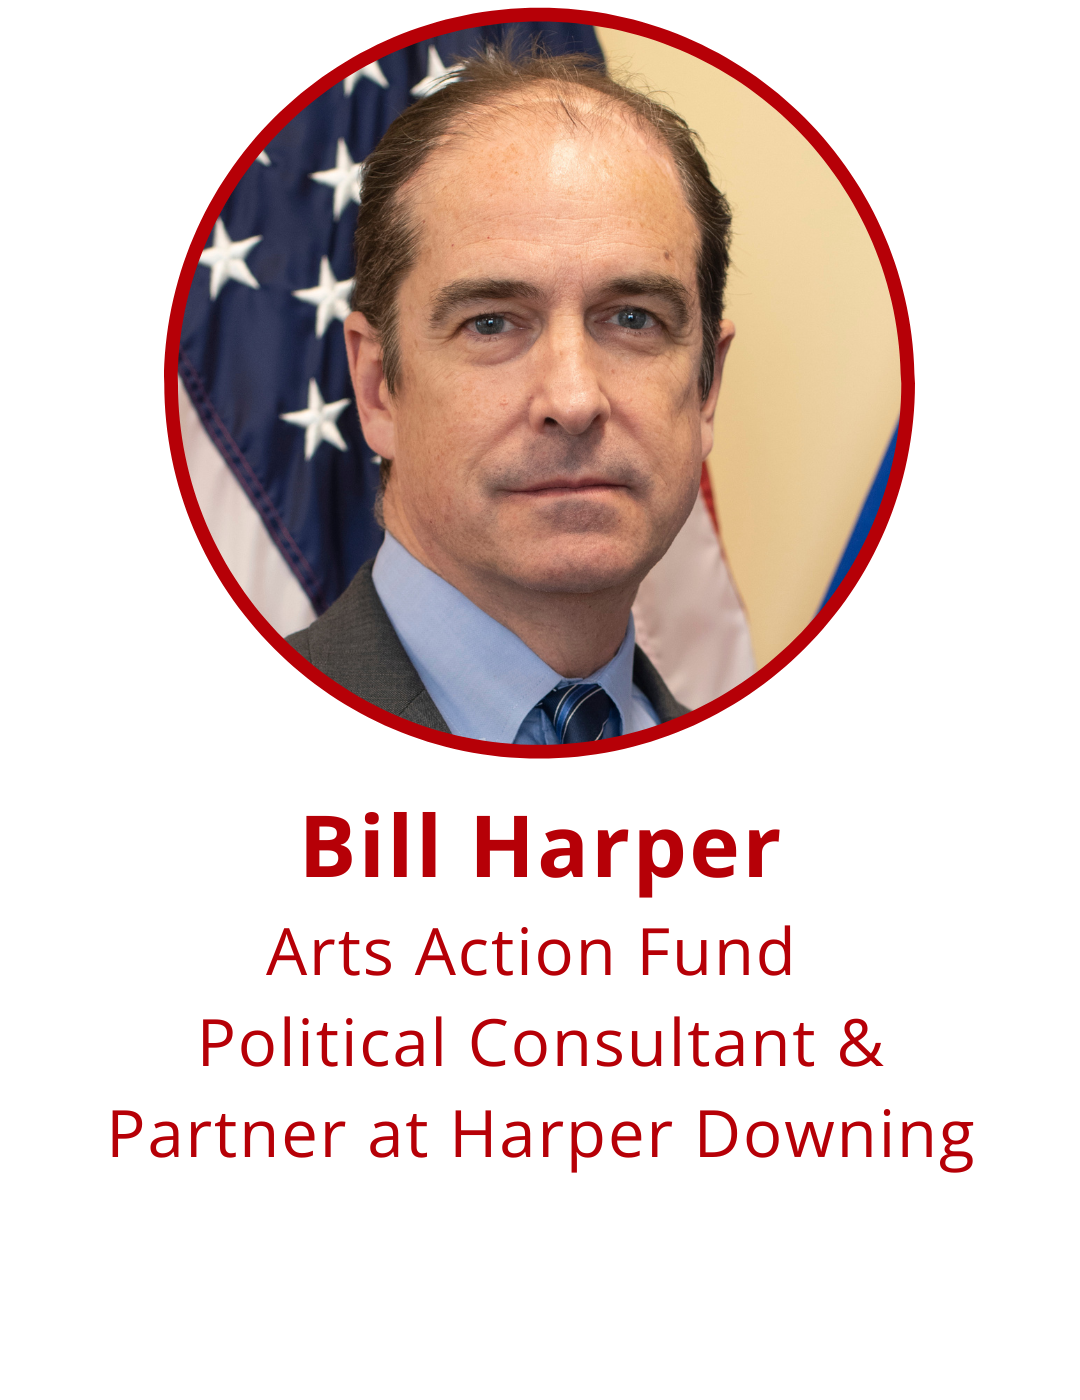 Bill Harper; Arts Action Fund Political Consultant & Partner at Harper Downing